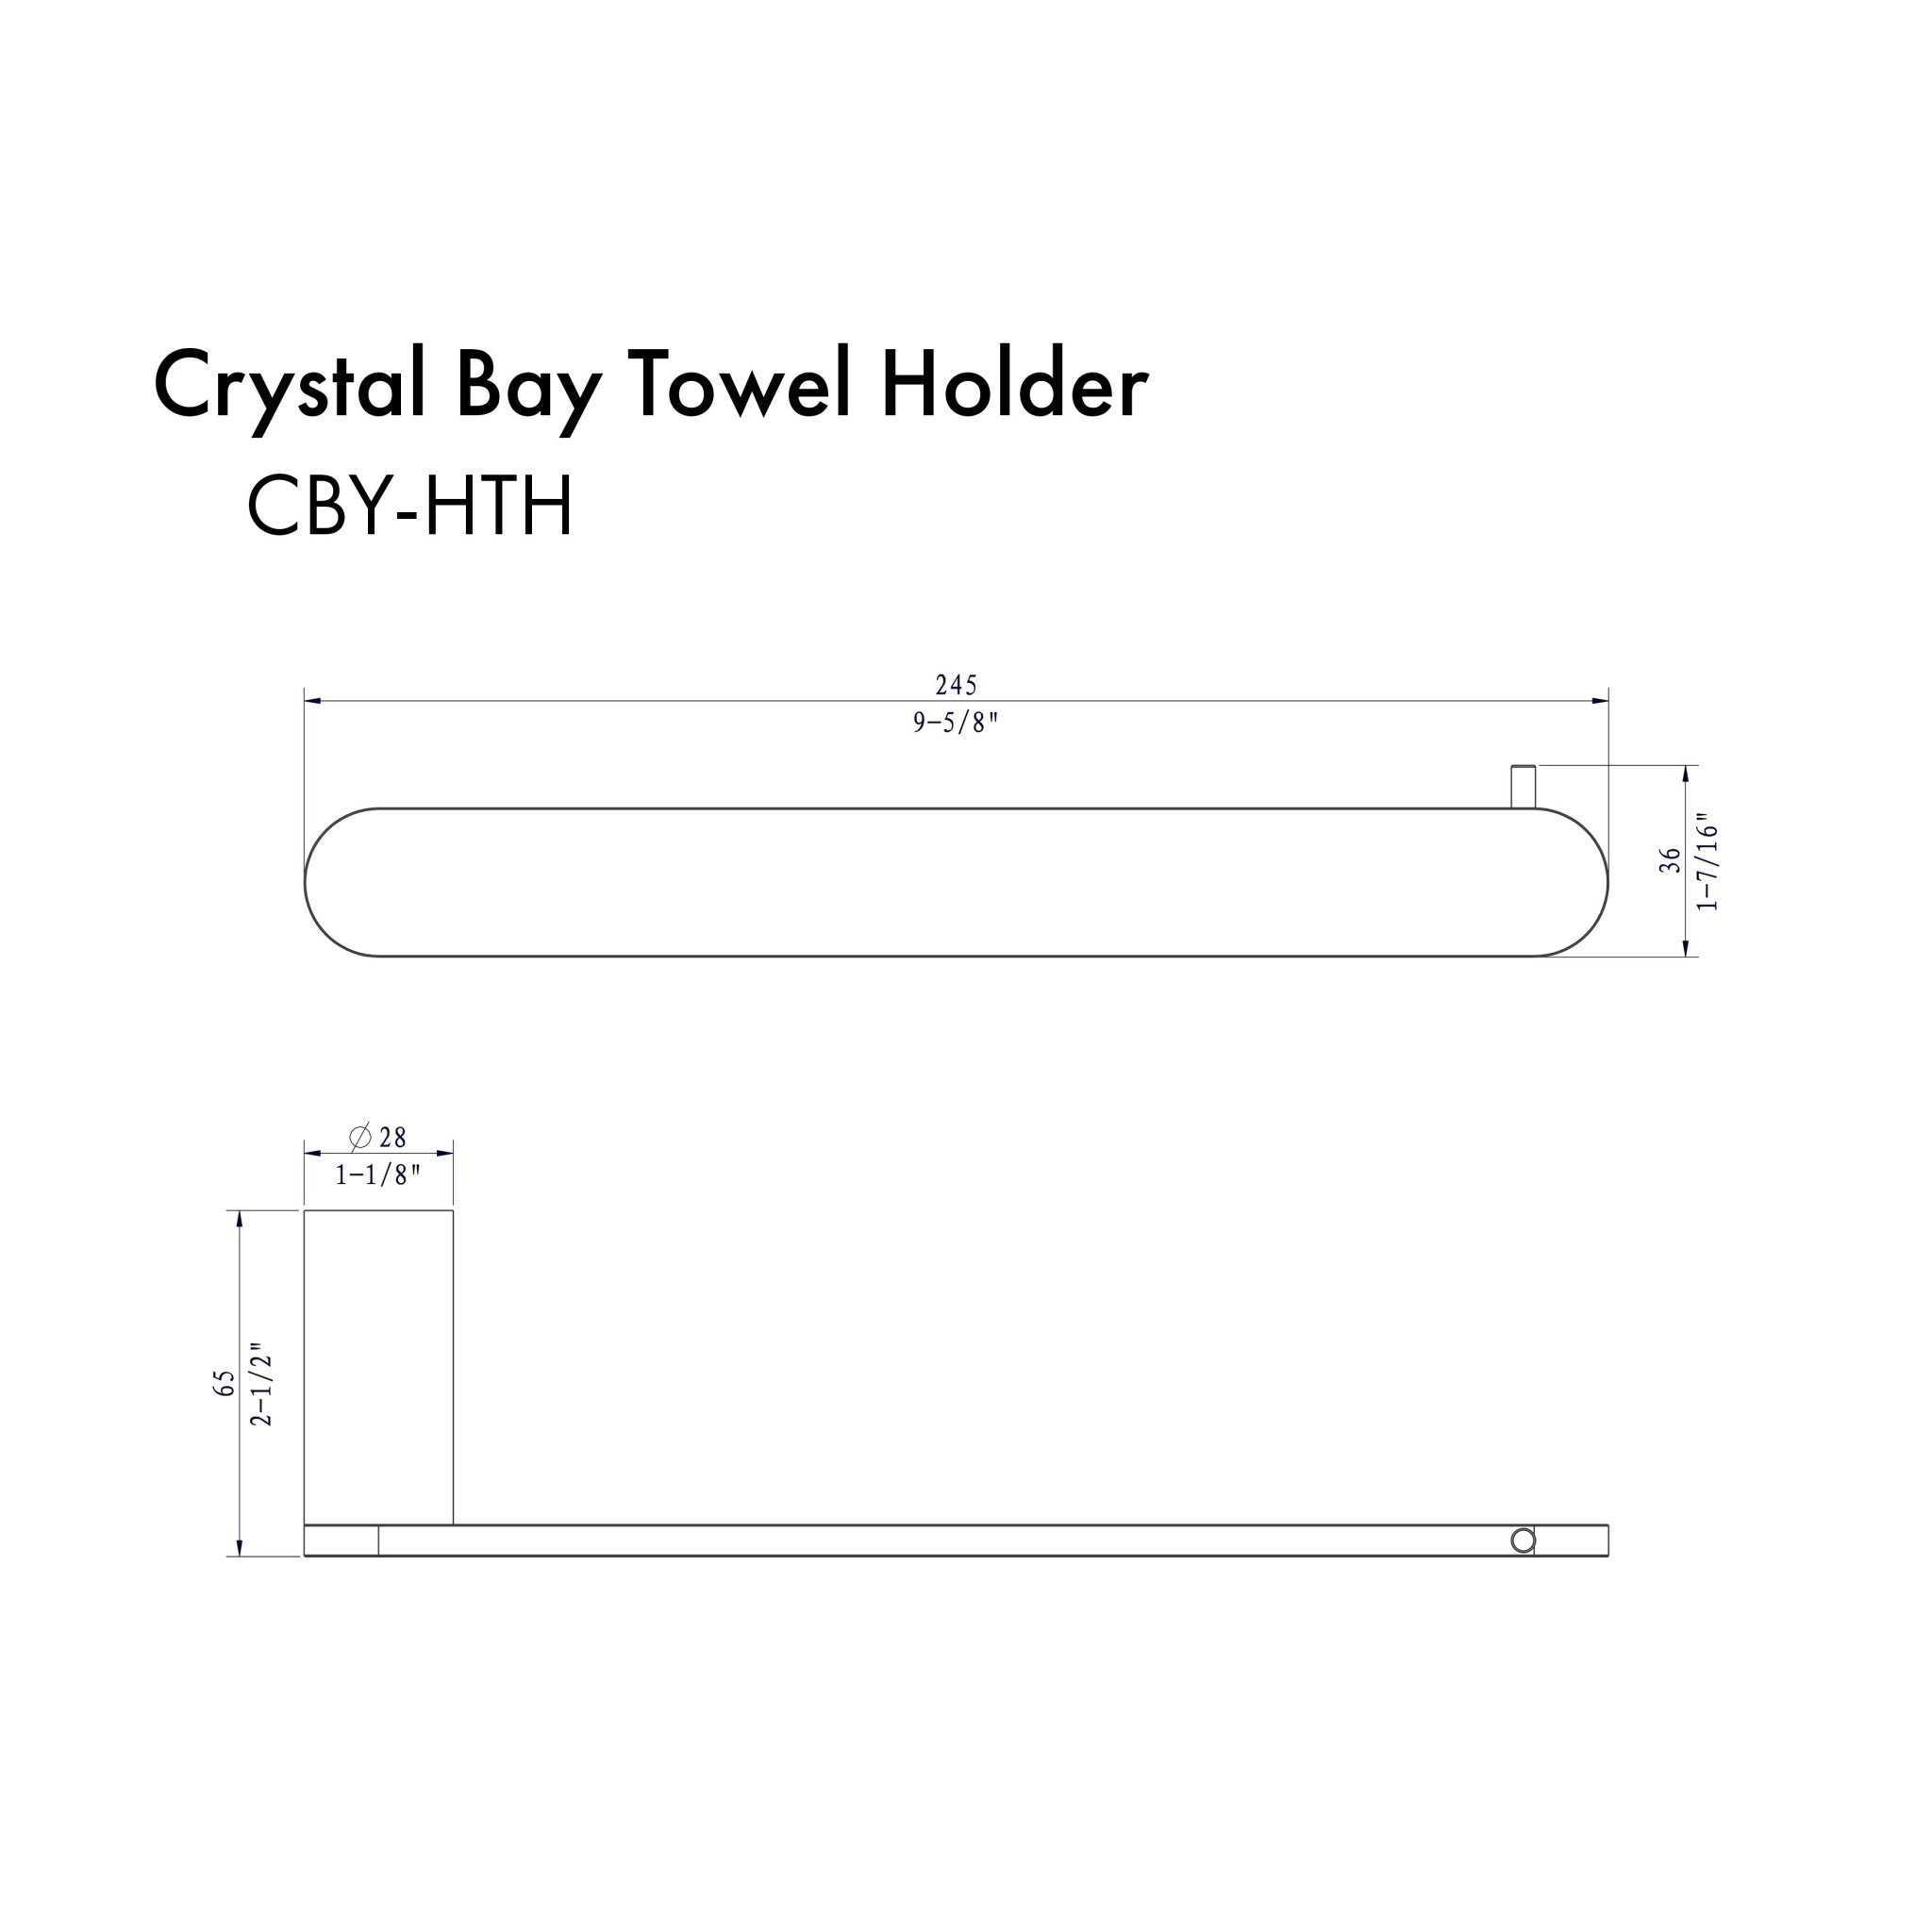 ZLINE Crystal Bay Towel Holder with Color Options (CBY-HTH) dimensional diagram